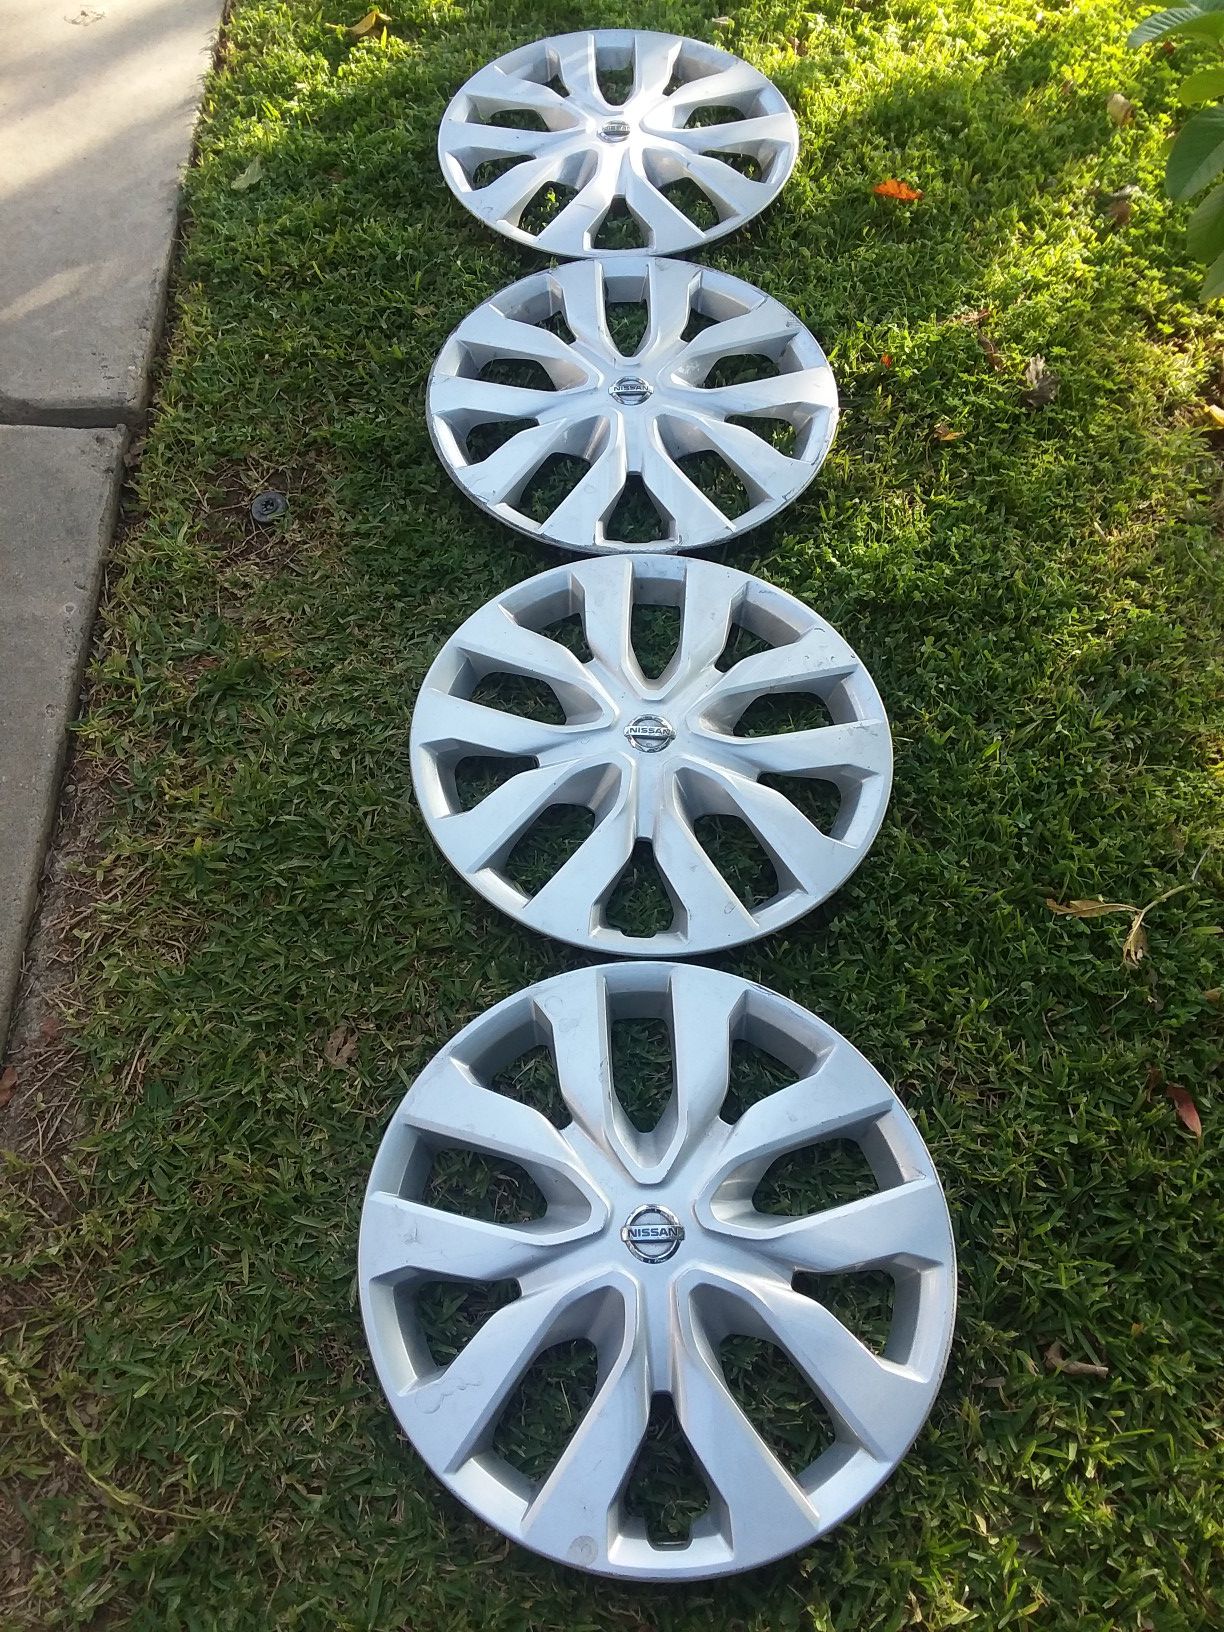 Nissan hubcaps